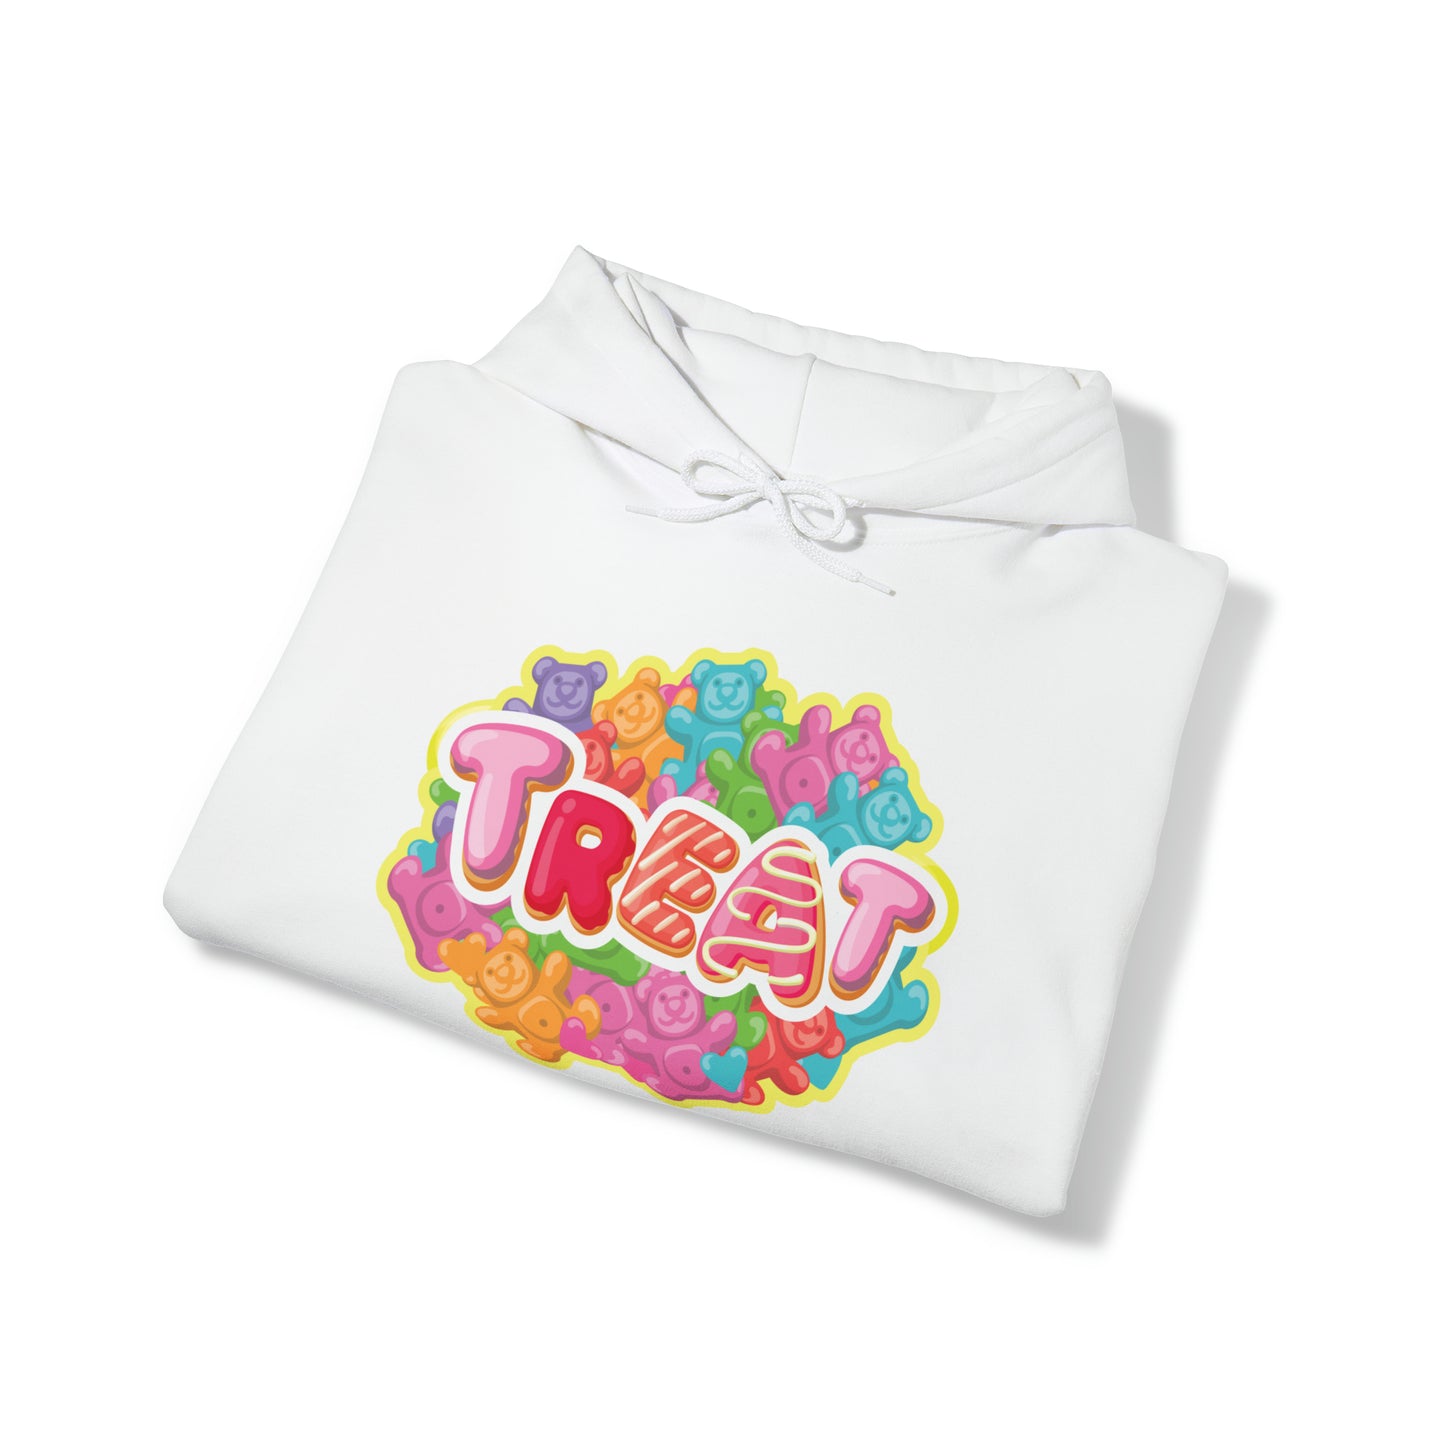 Treat Gummy Bear Logo Unisex Heavy Blend™ Hooded Sweatshirt